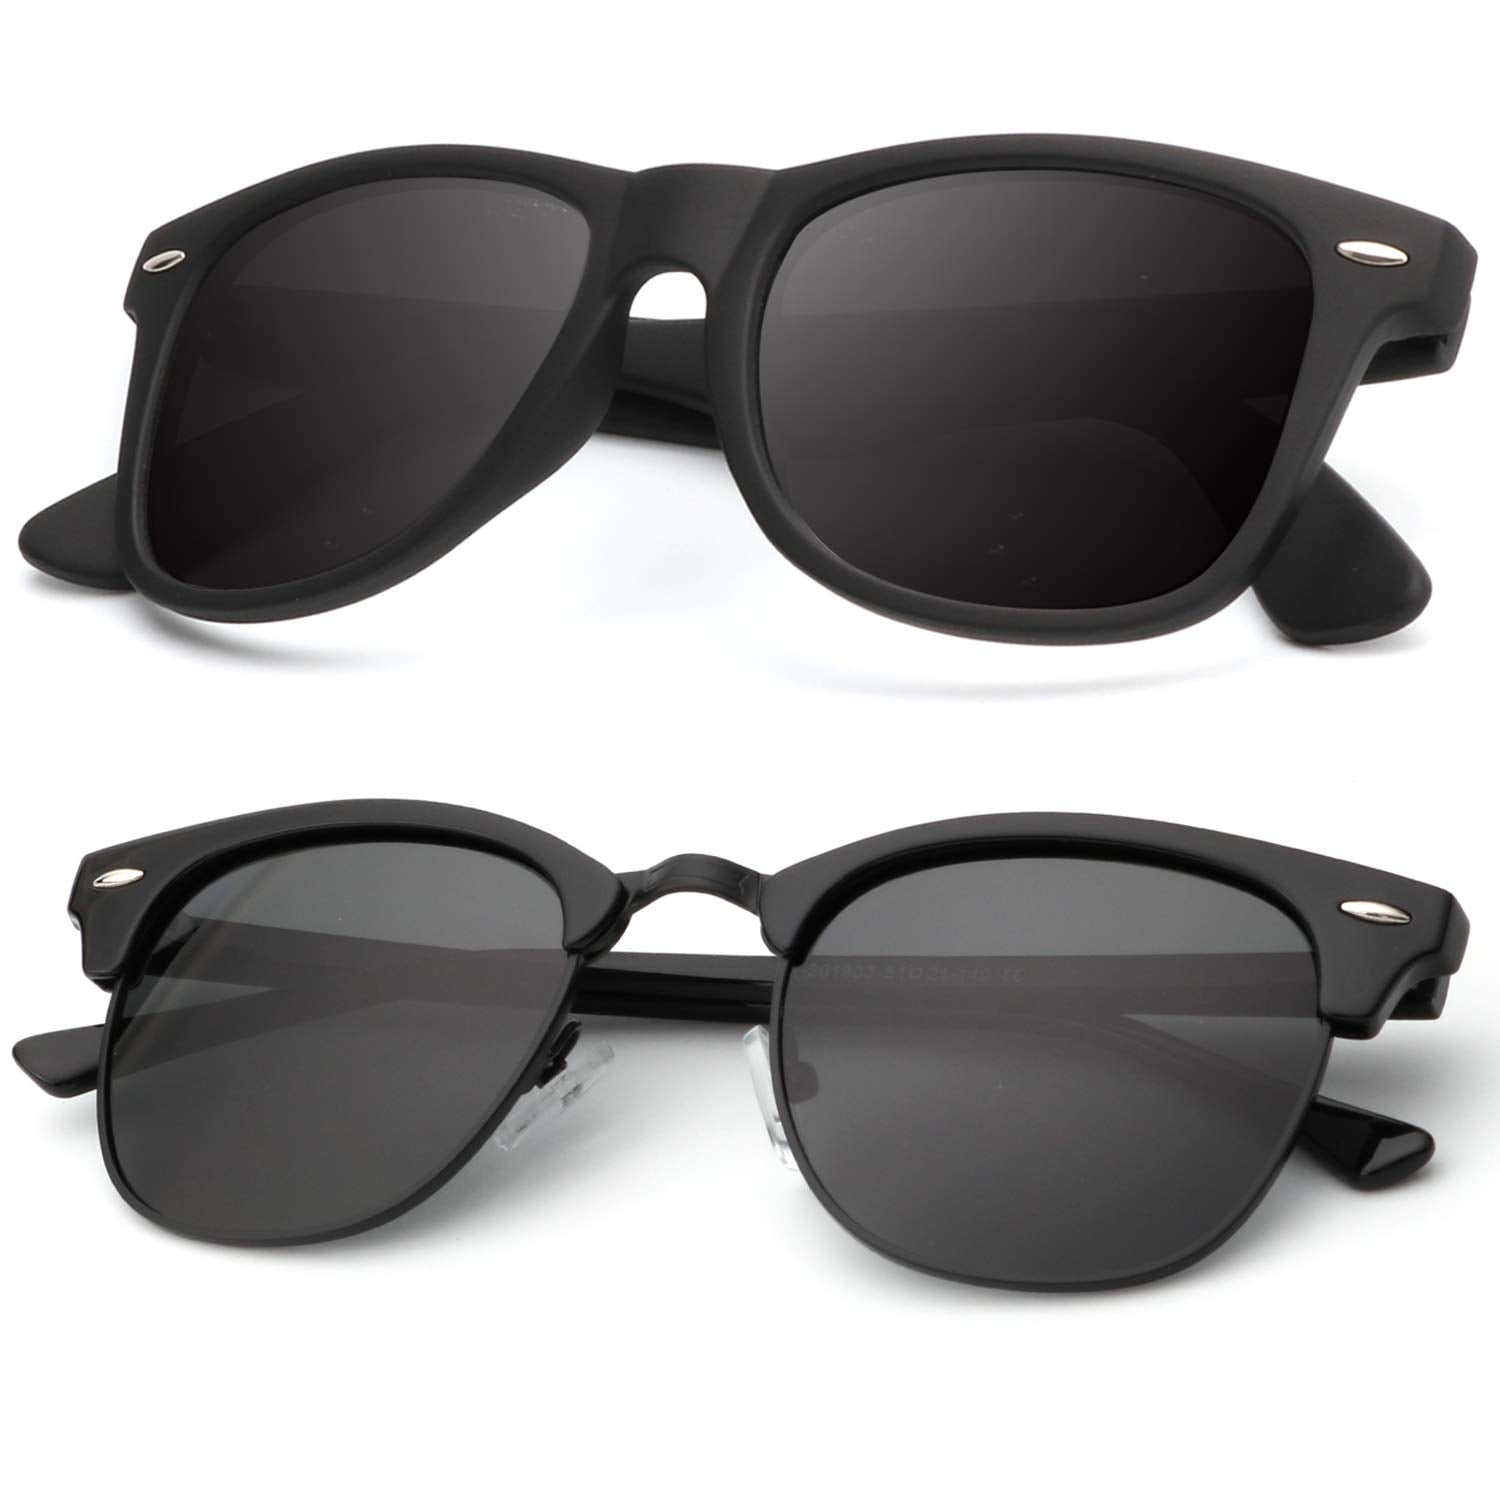 KALIYADI Polarized Sunglasses for Men and Women Semi-Rimless Frame Driving Sun Glasses 100% UV Blocking (2 Pack), Adult Unisex, Size: One size, Black